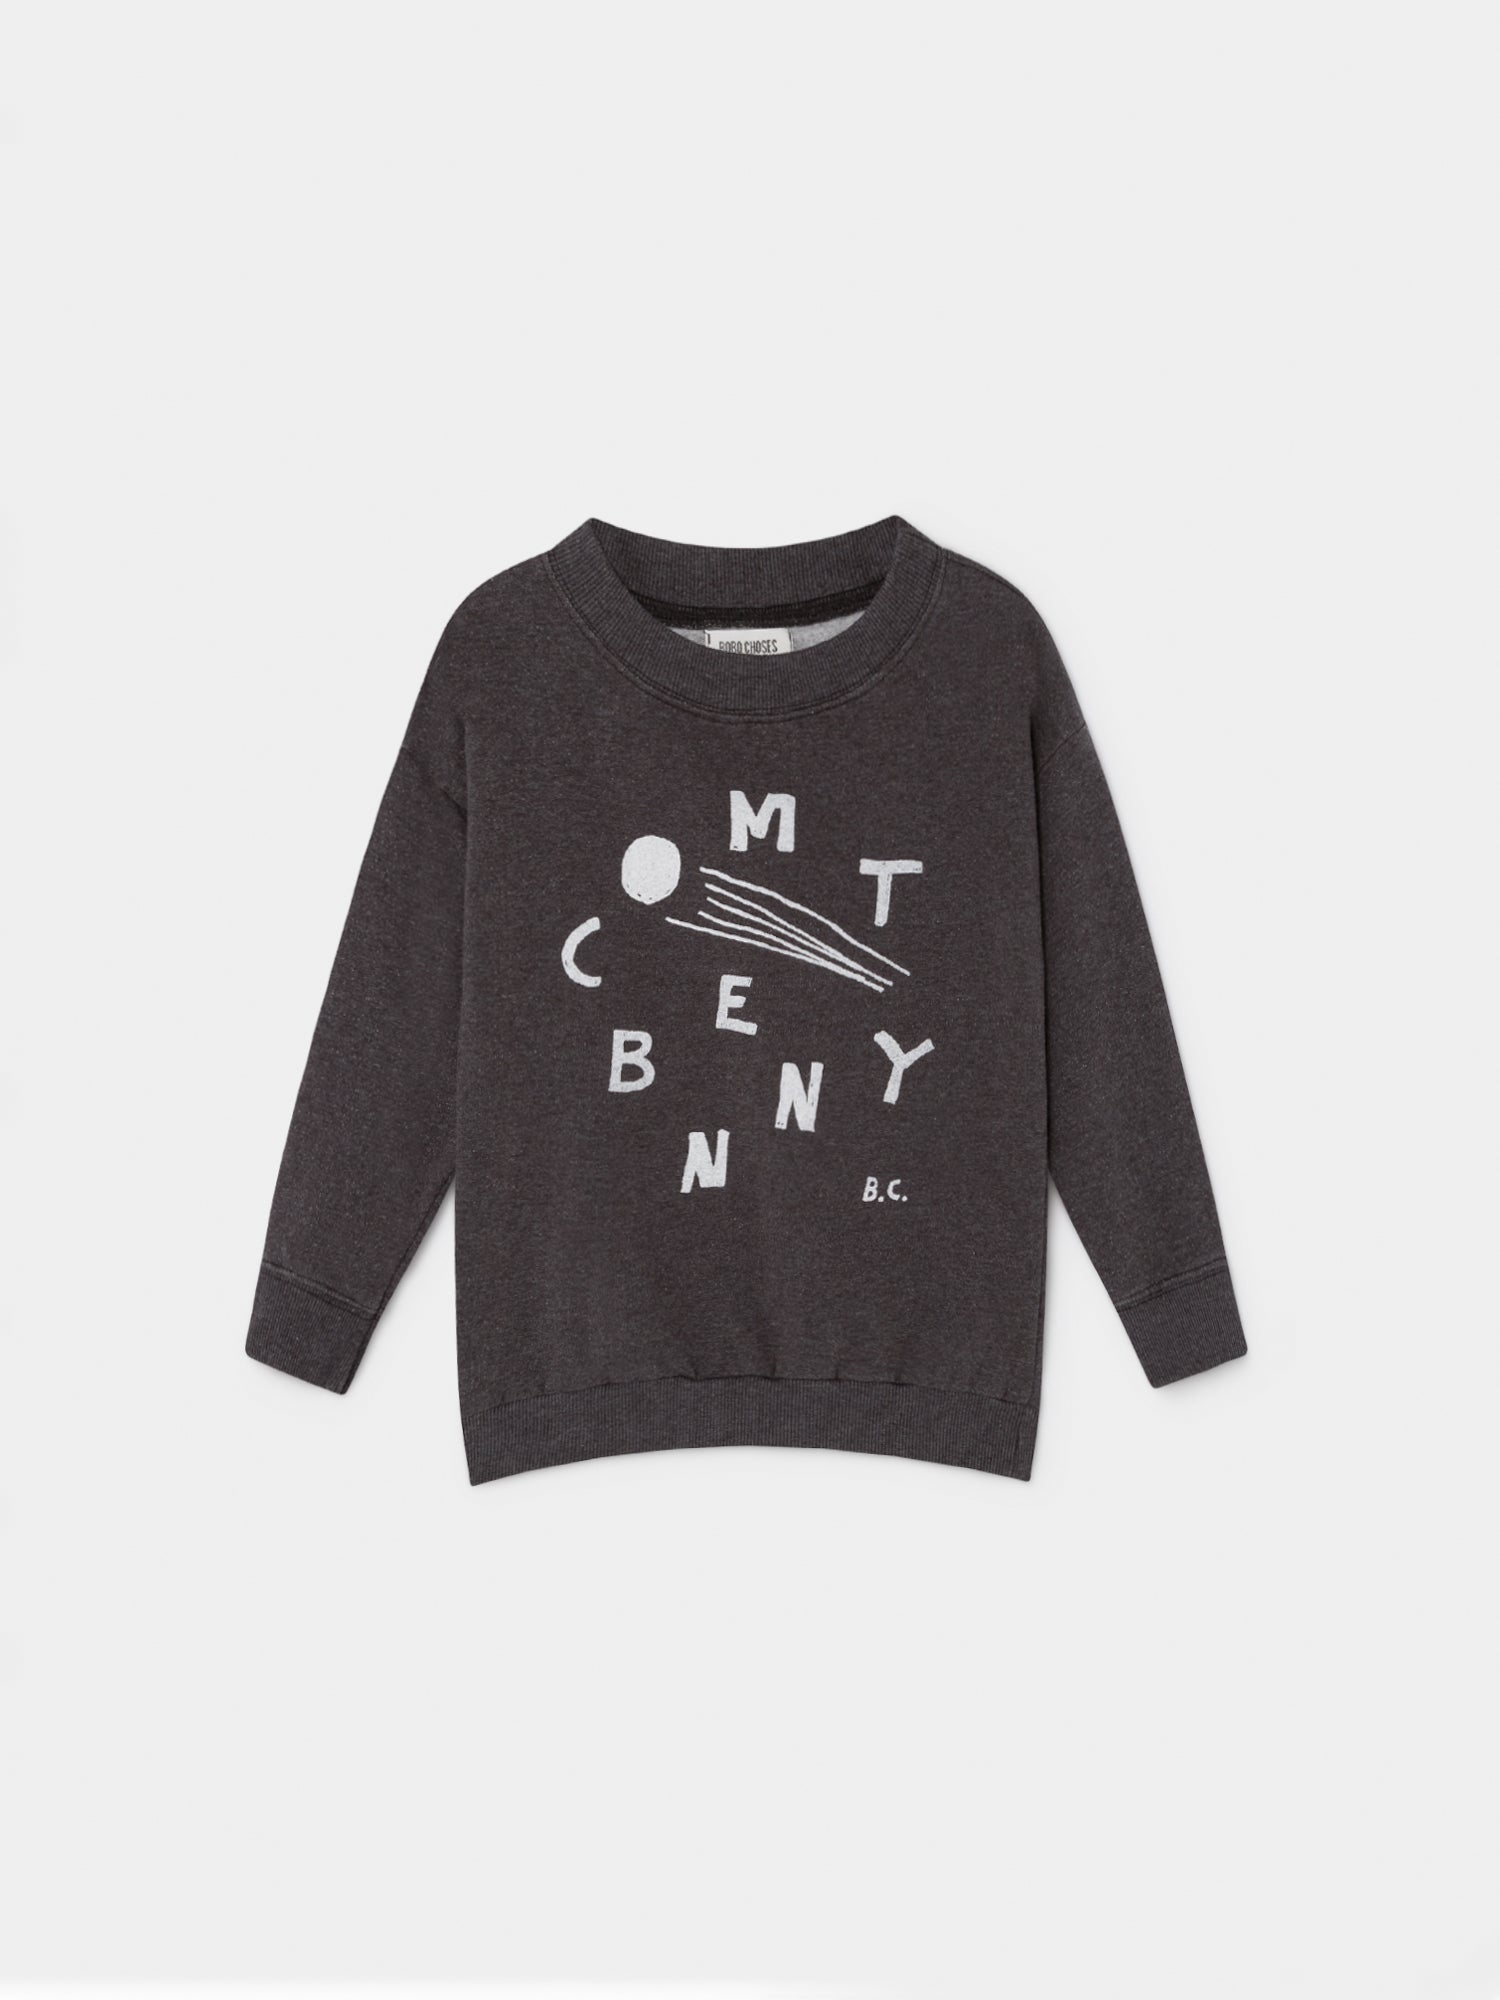 Boys Grey Comet Benny Sweatshirt